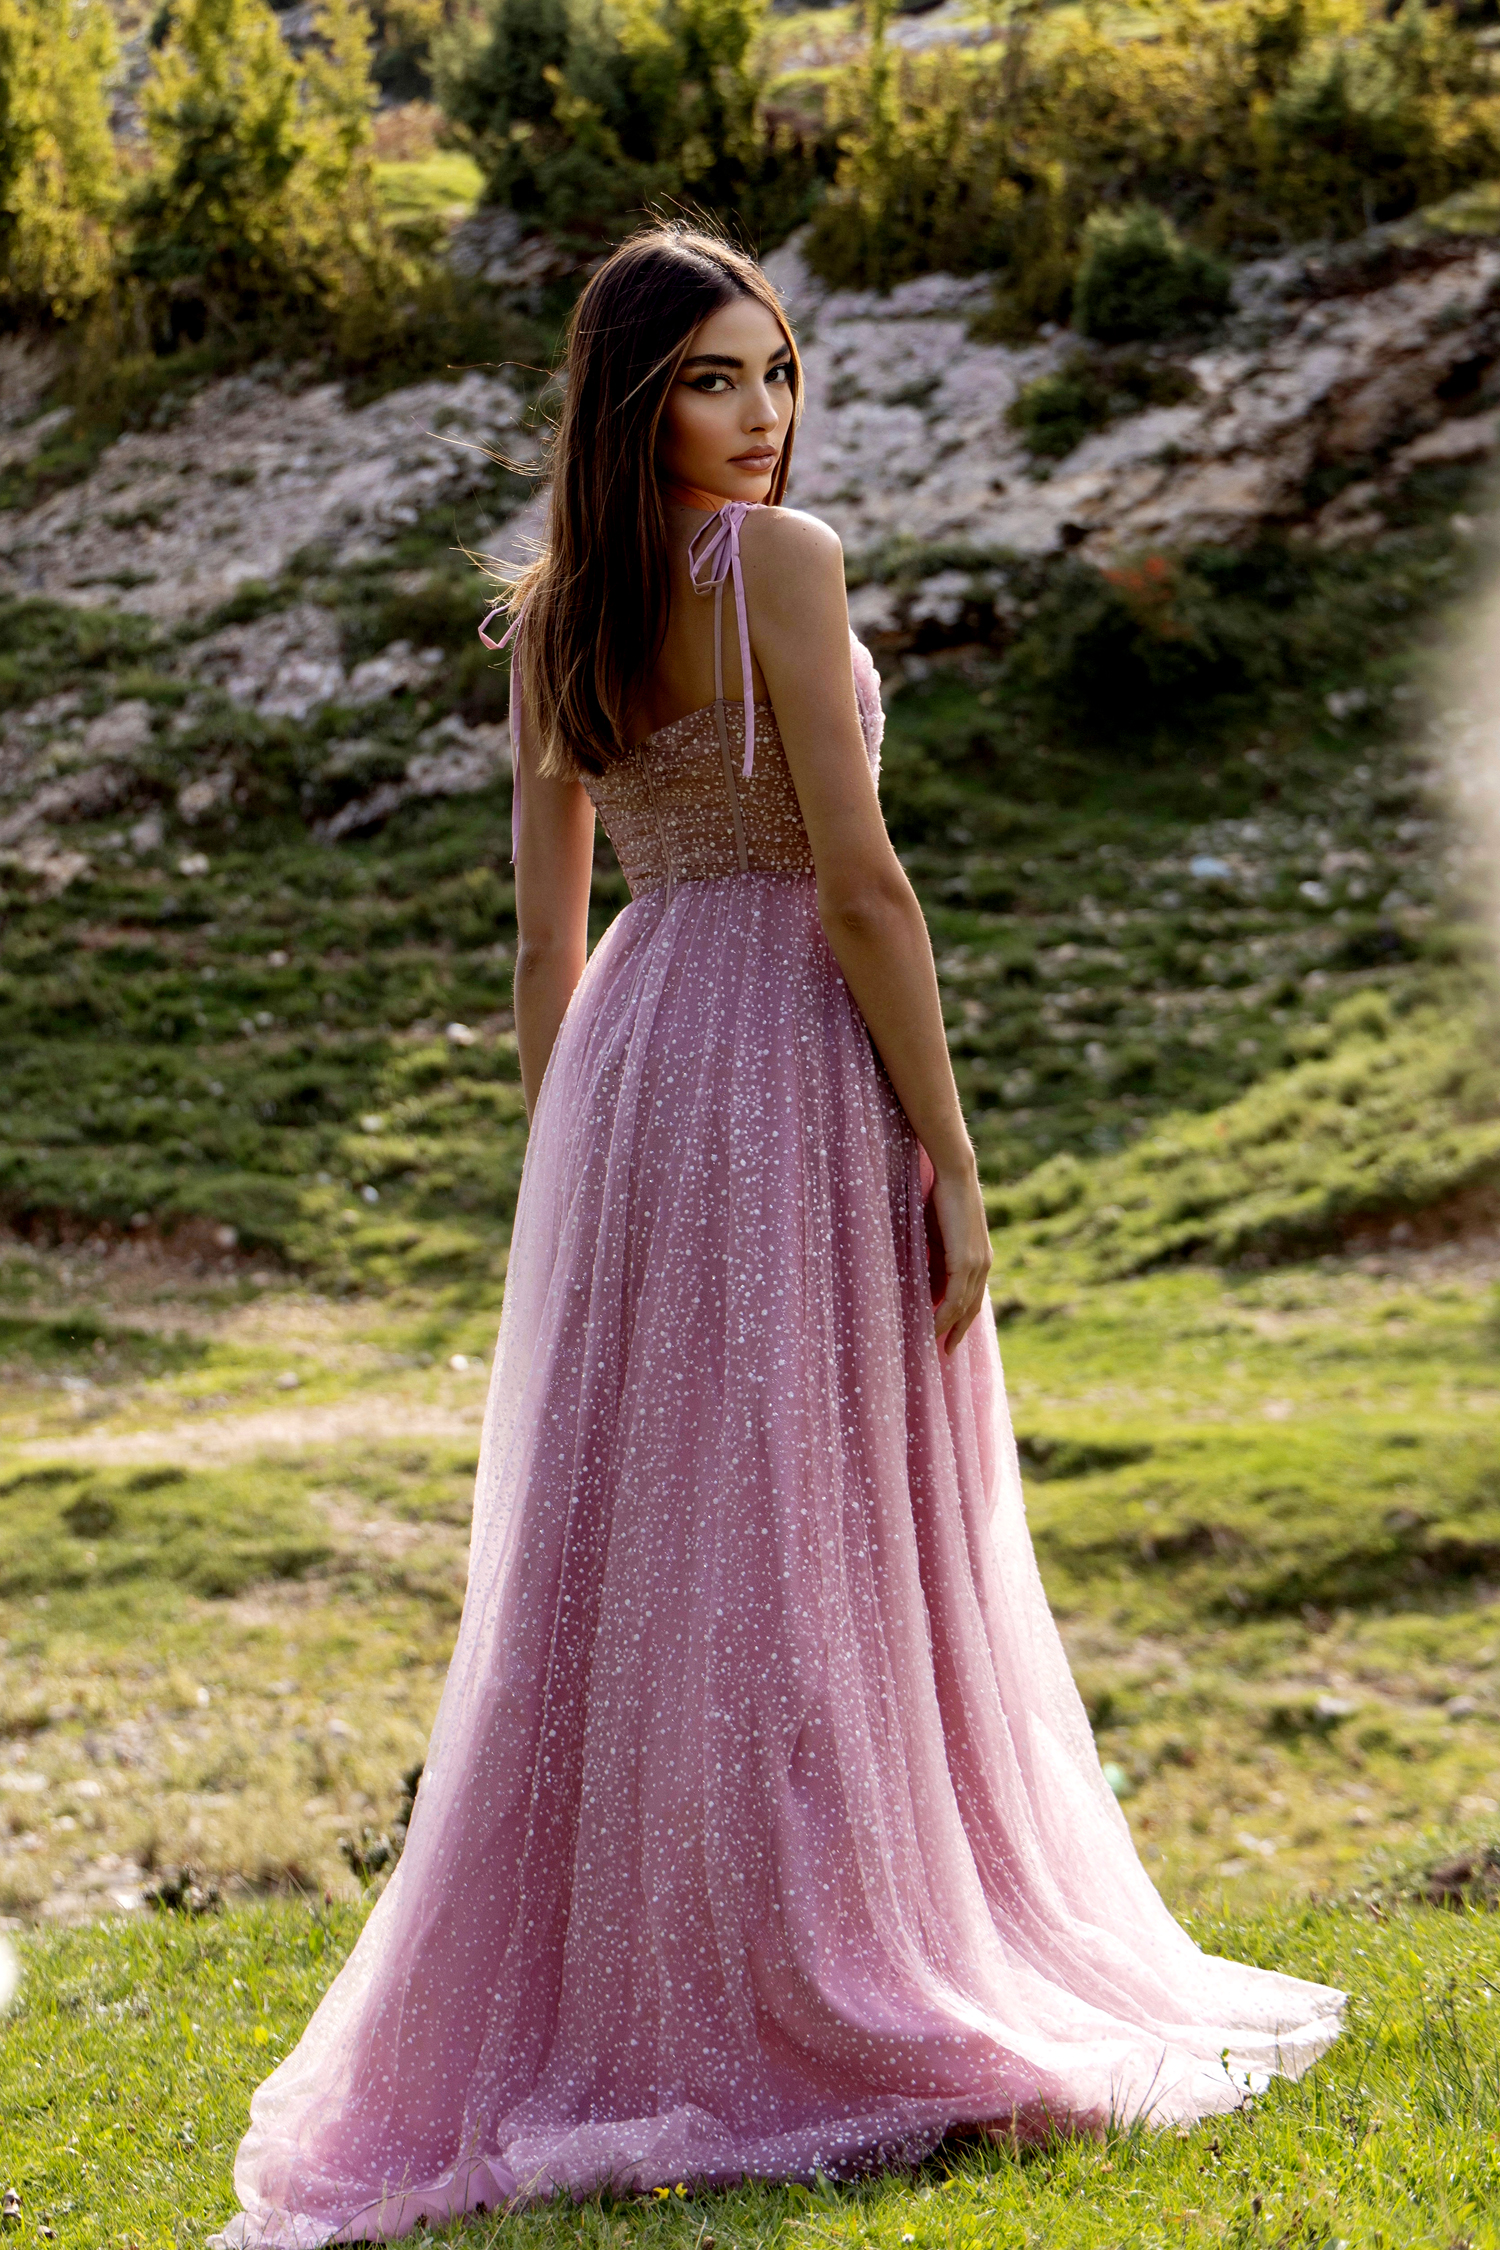 Pink Formal Dresses, Cocktail Dresses, Evening Dresses - Hello Molly AU